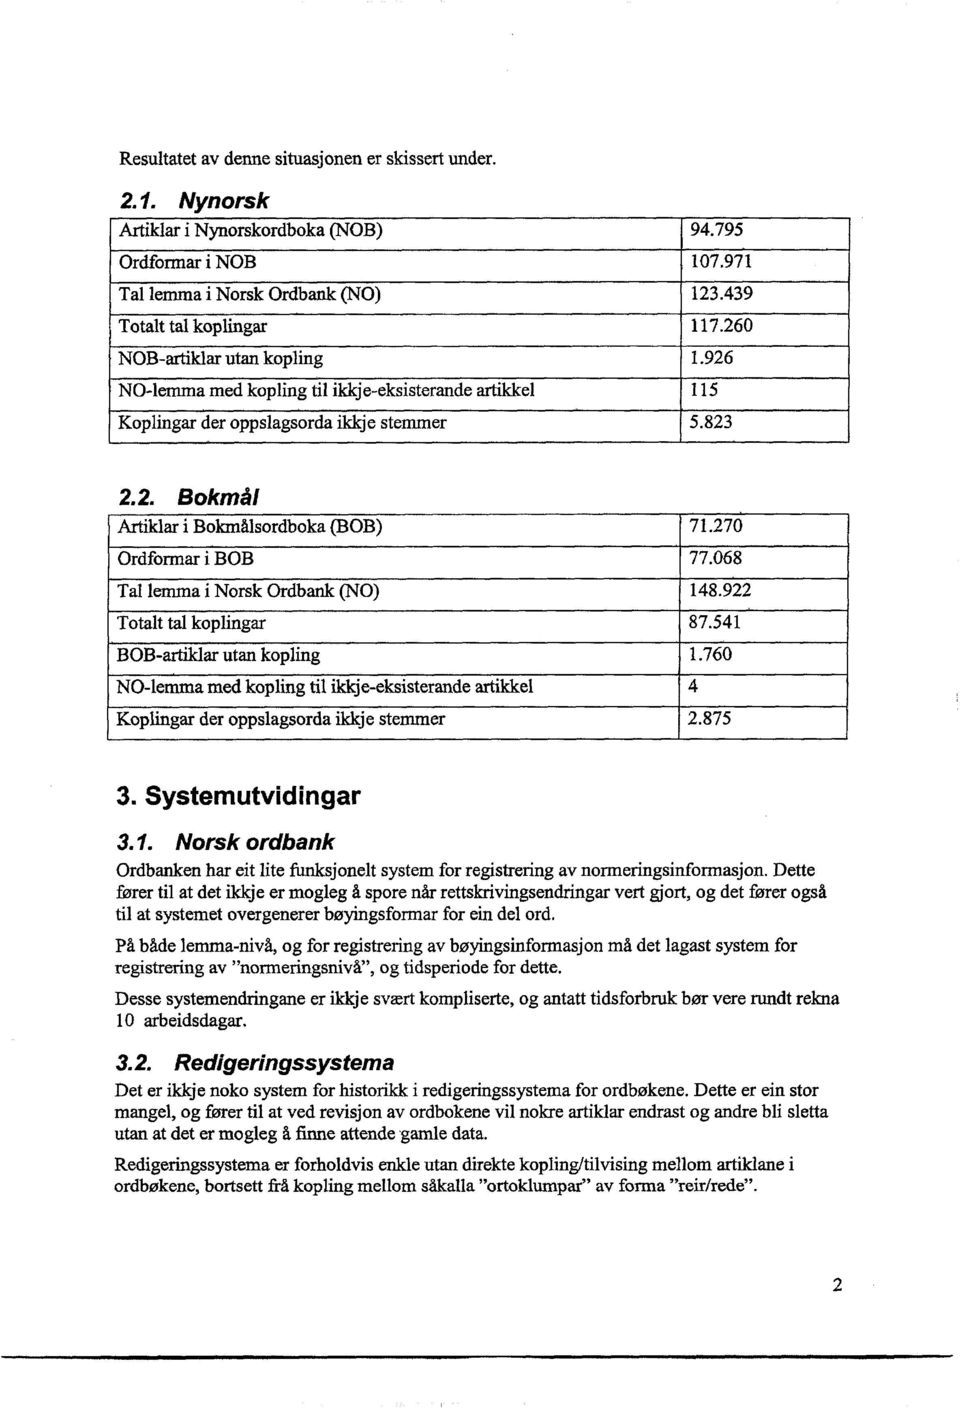 270 Ordformar i BOB 77.068 Tal lemma i Norsk Ordbank (NO) 148.922 Totalt tal koplingar 87.541 BOB-artiklar utan kopling 1.